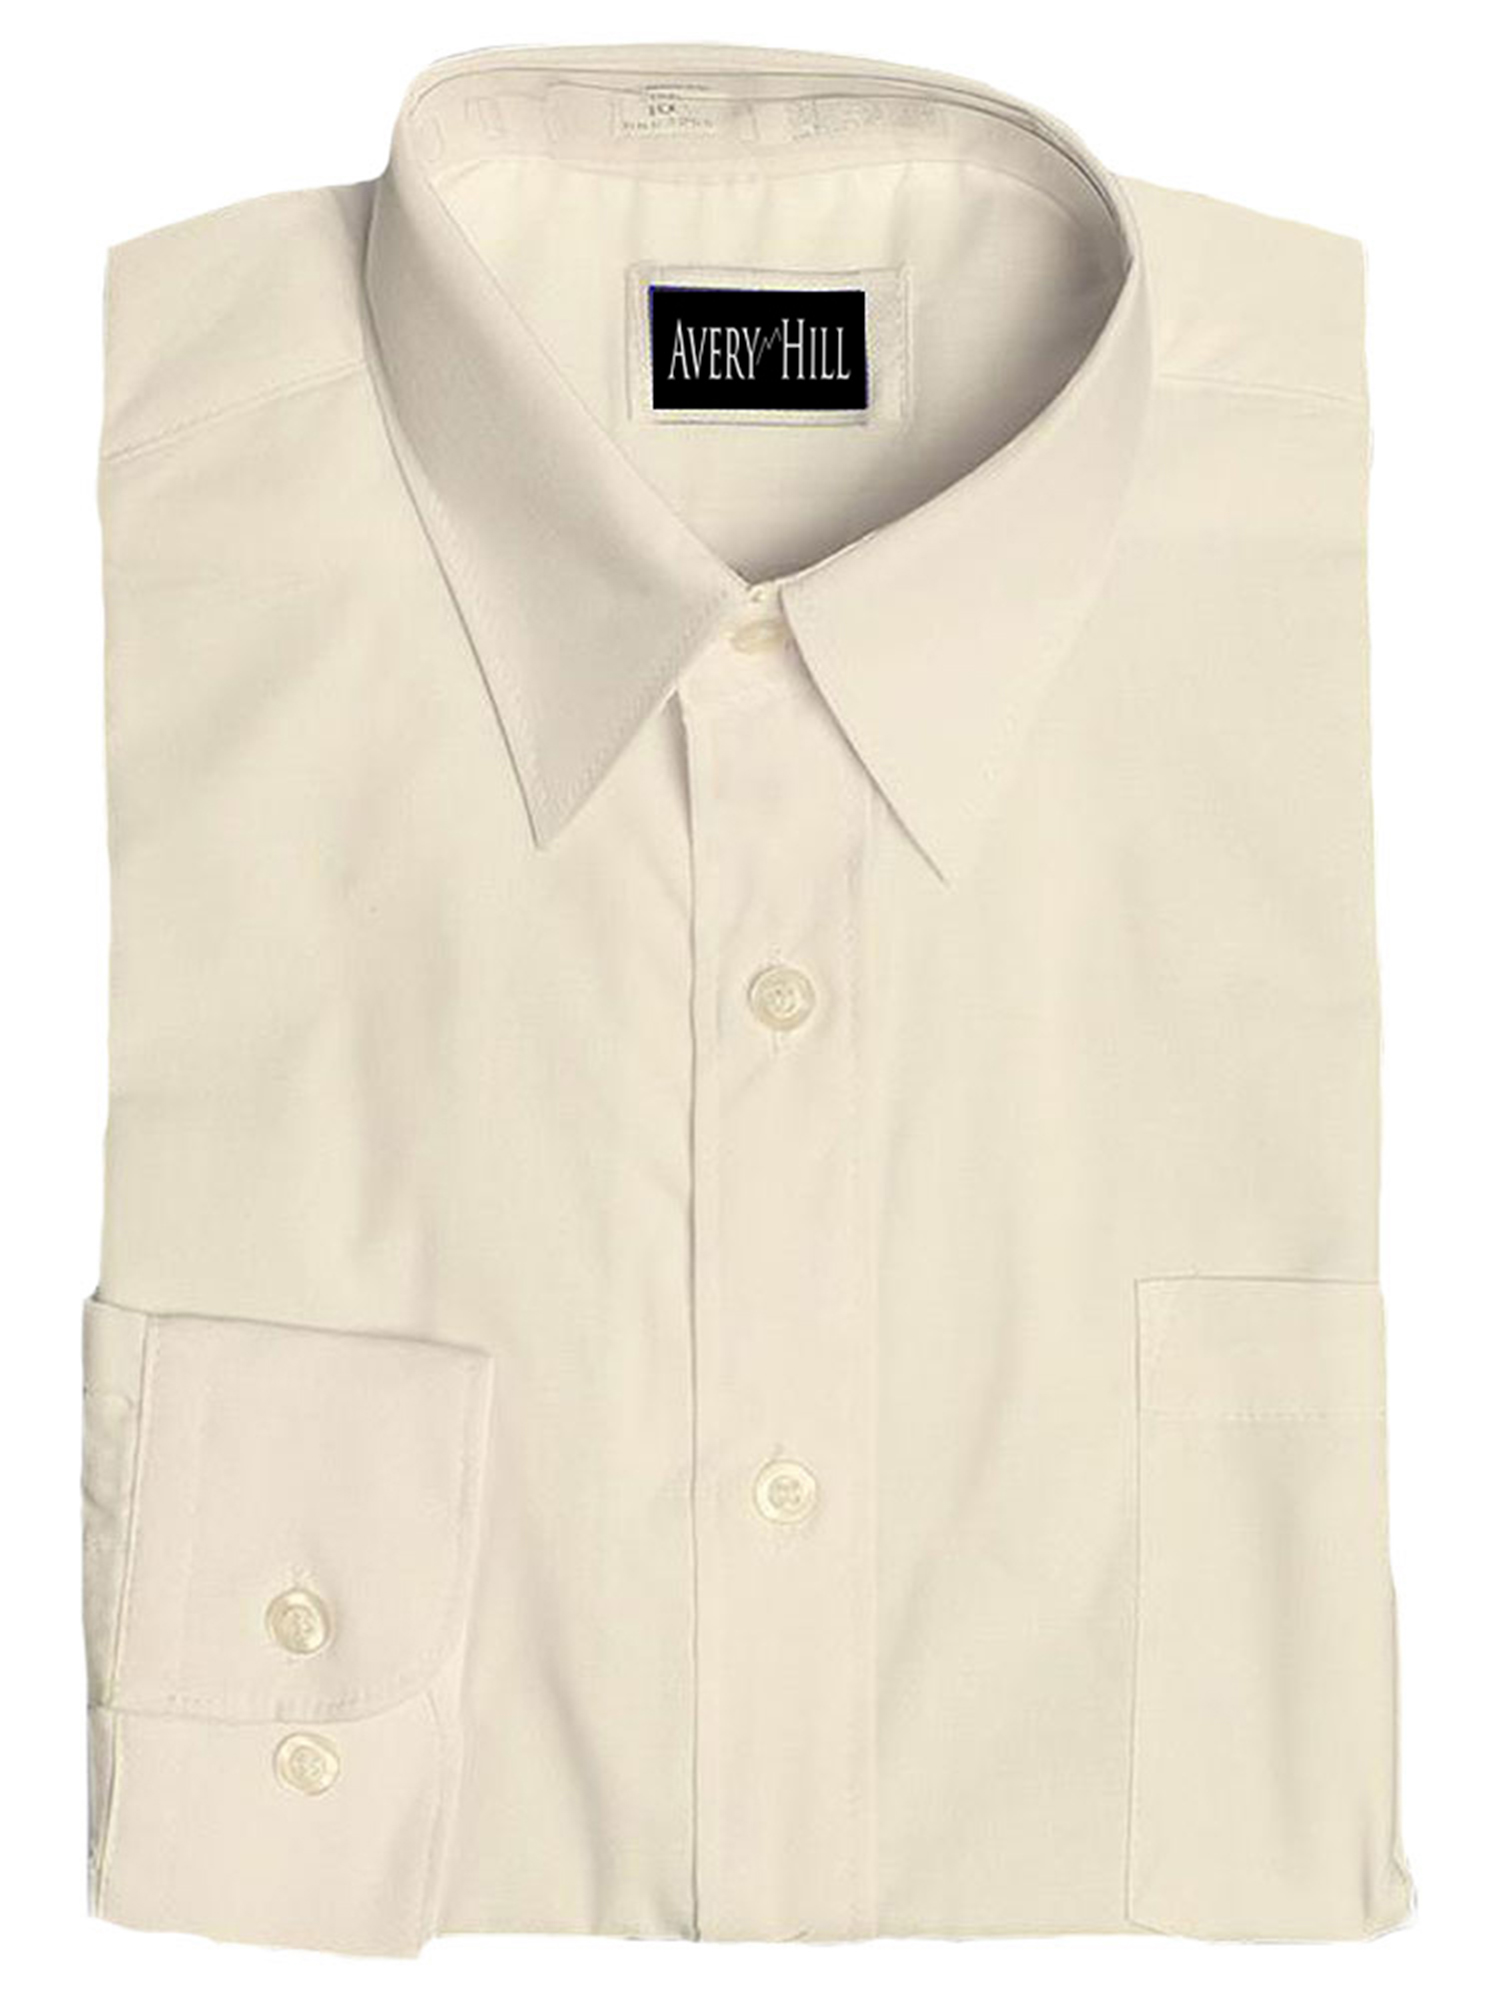 Boys White or Ivory Long Sleeve Wrinkle Resistant Dress Shirt IV 6